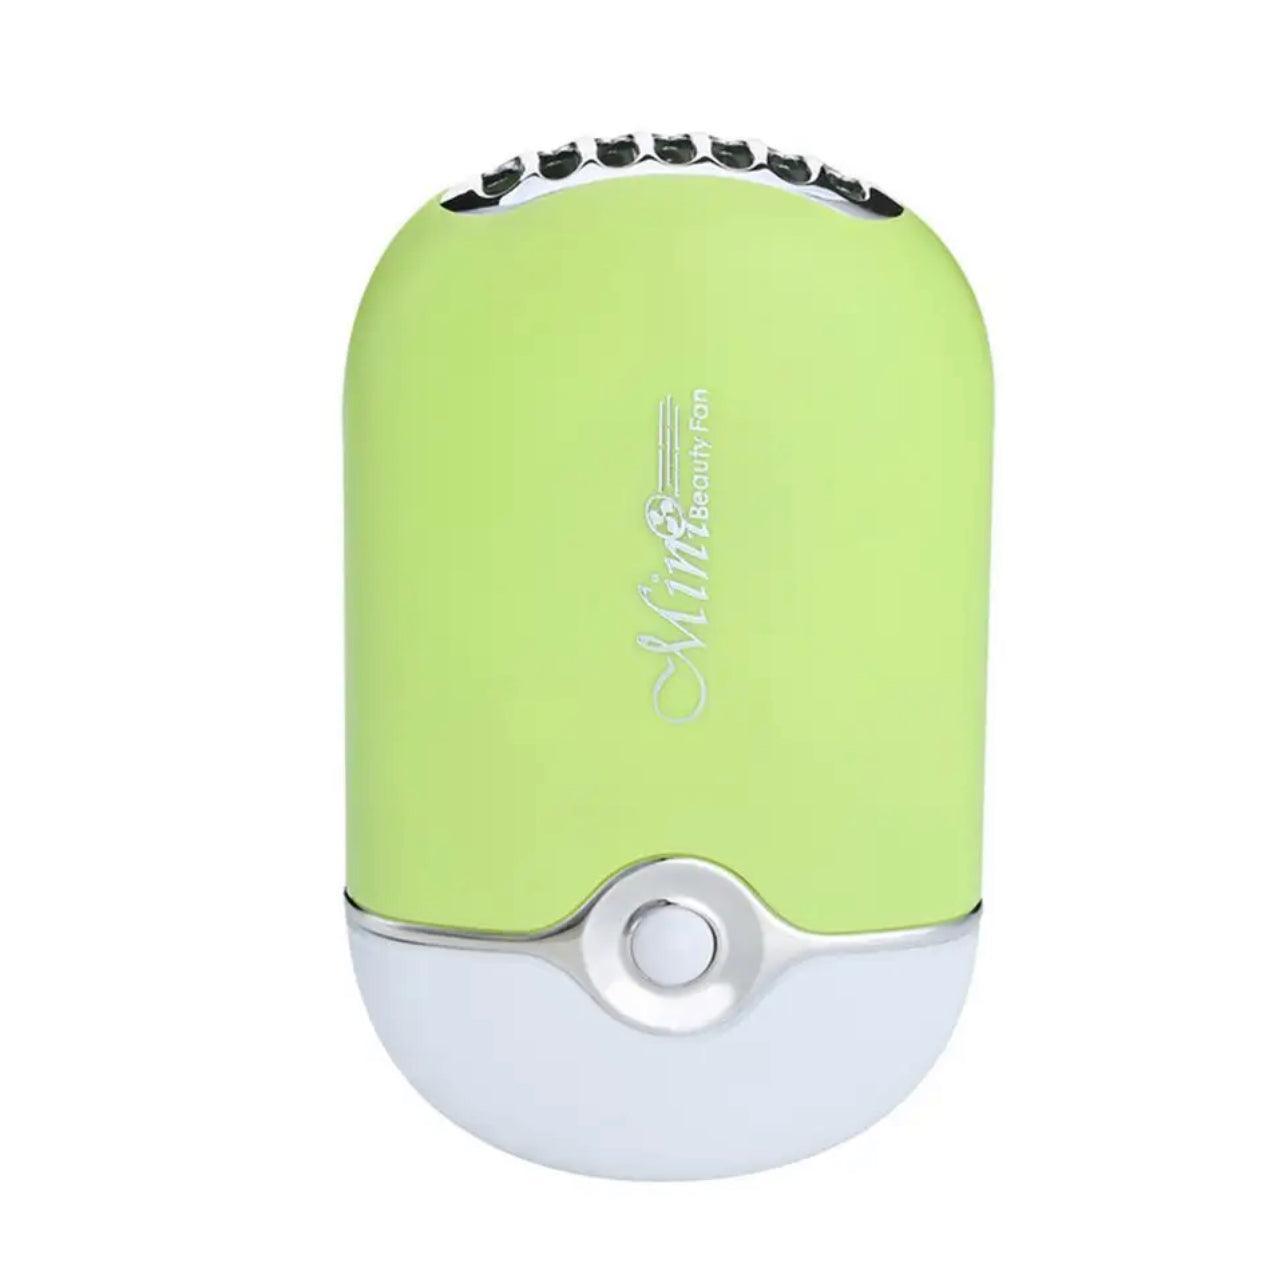 Mini USB Rechargeable Eyelash Extension Dryer - Giali Lashes 